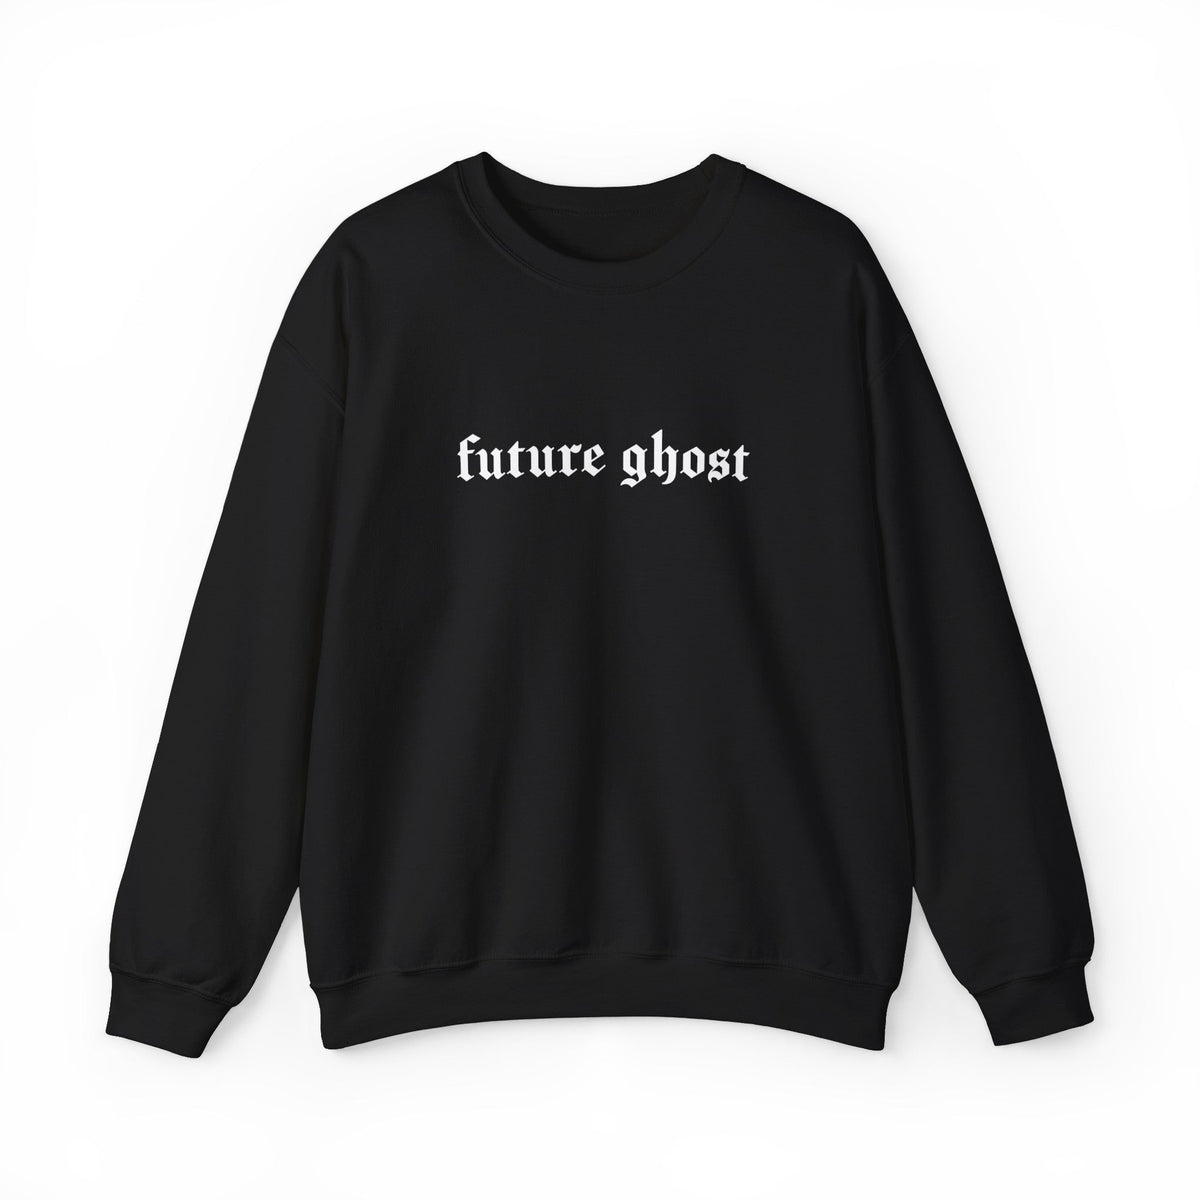 Future Ghost Long Sleeve Crew Neck Sweatshirt - Goth Cloth Co.Sweatshirt32640926701465159840